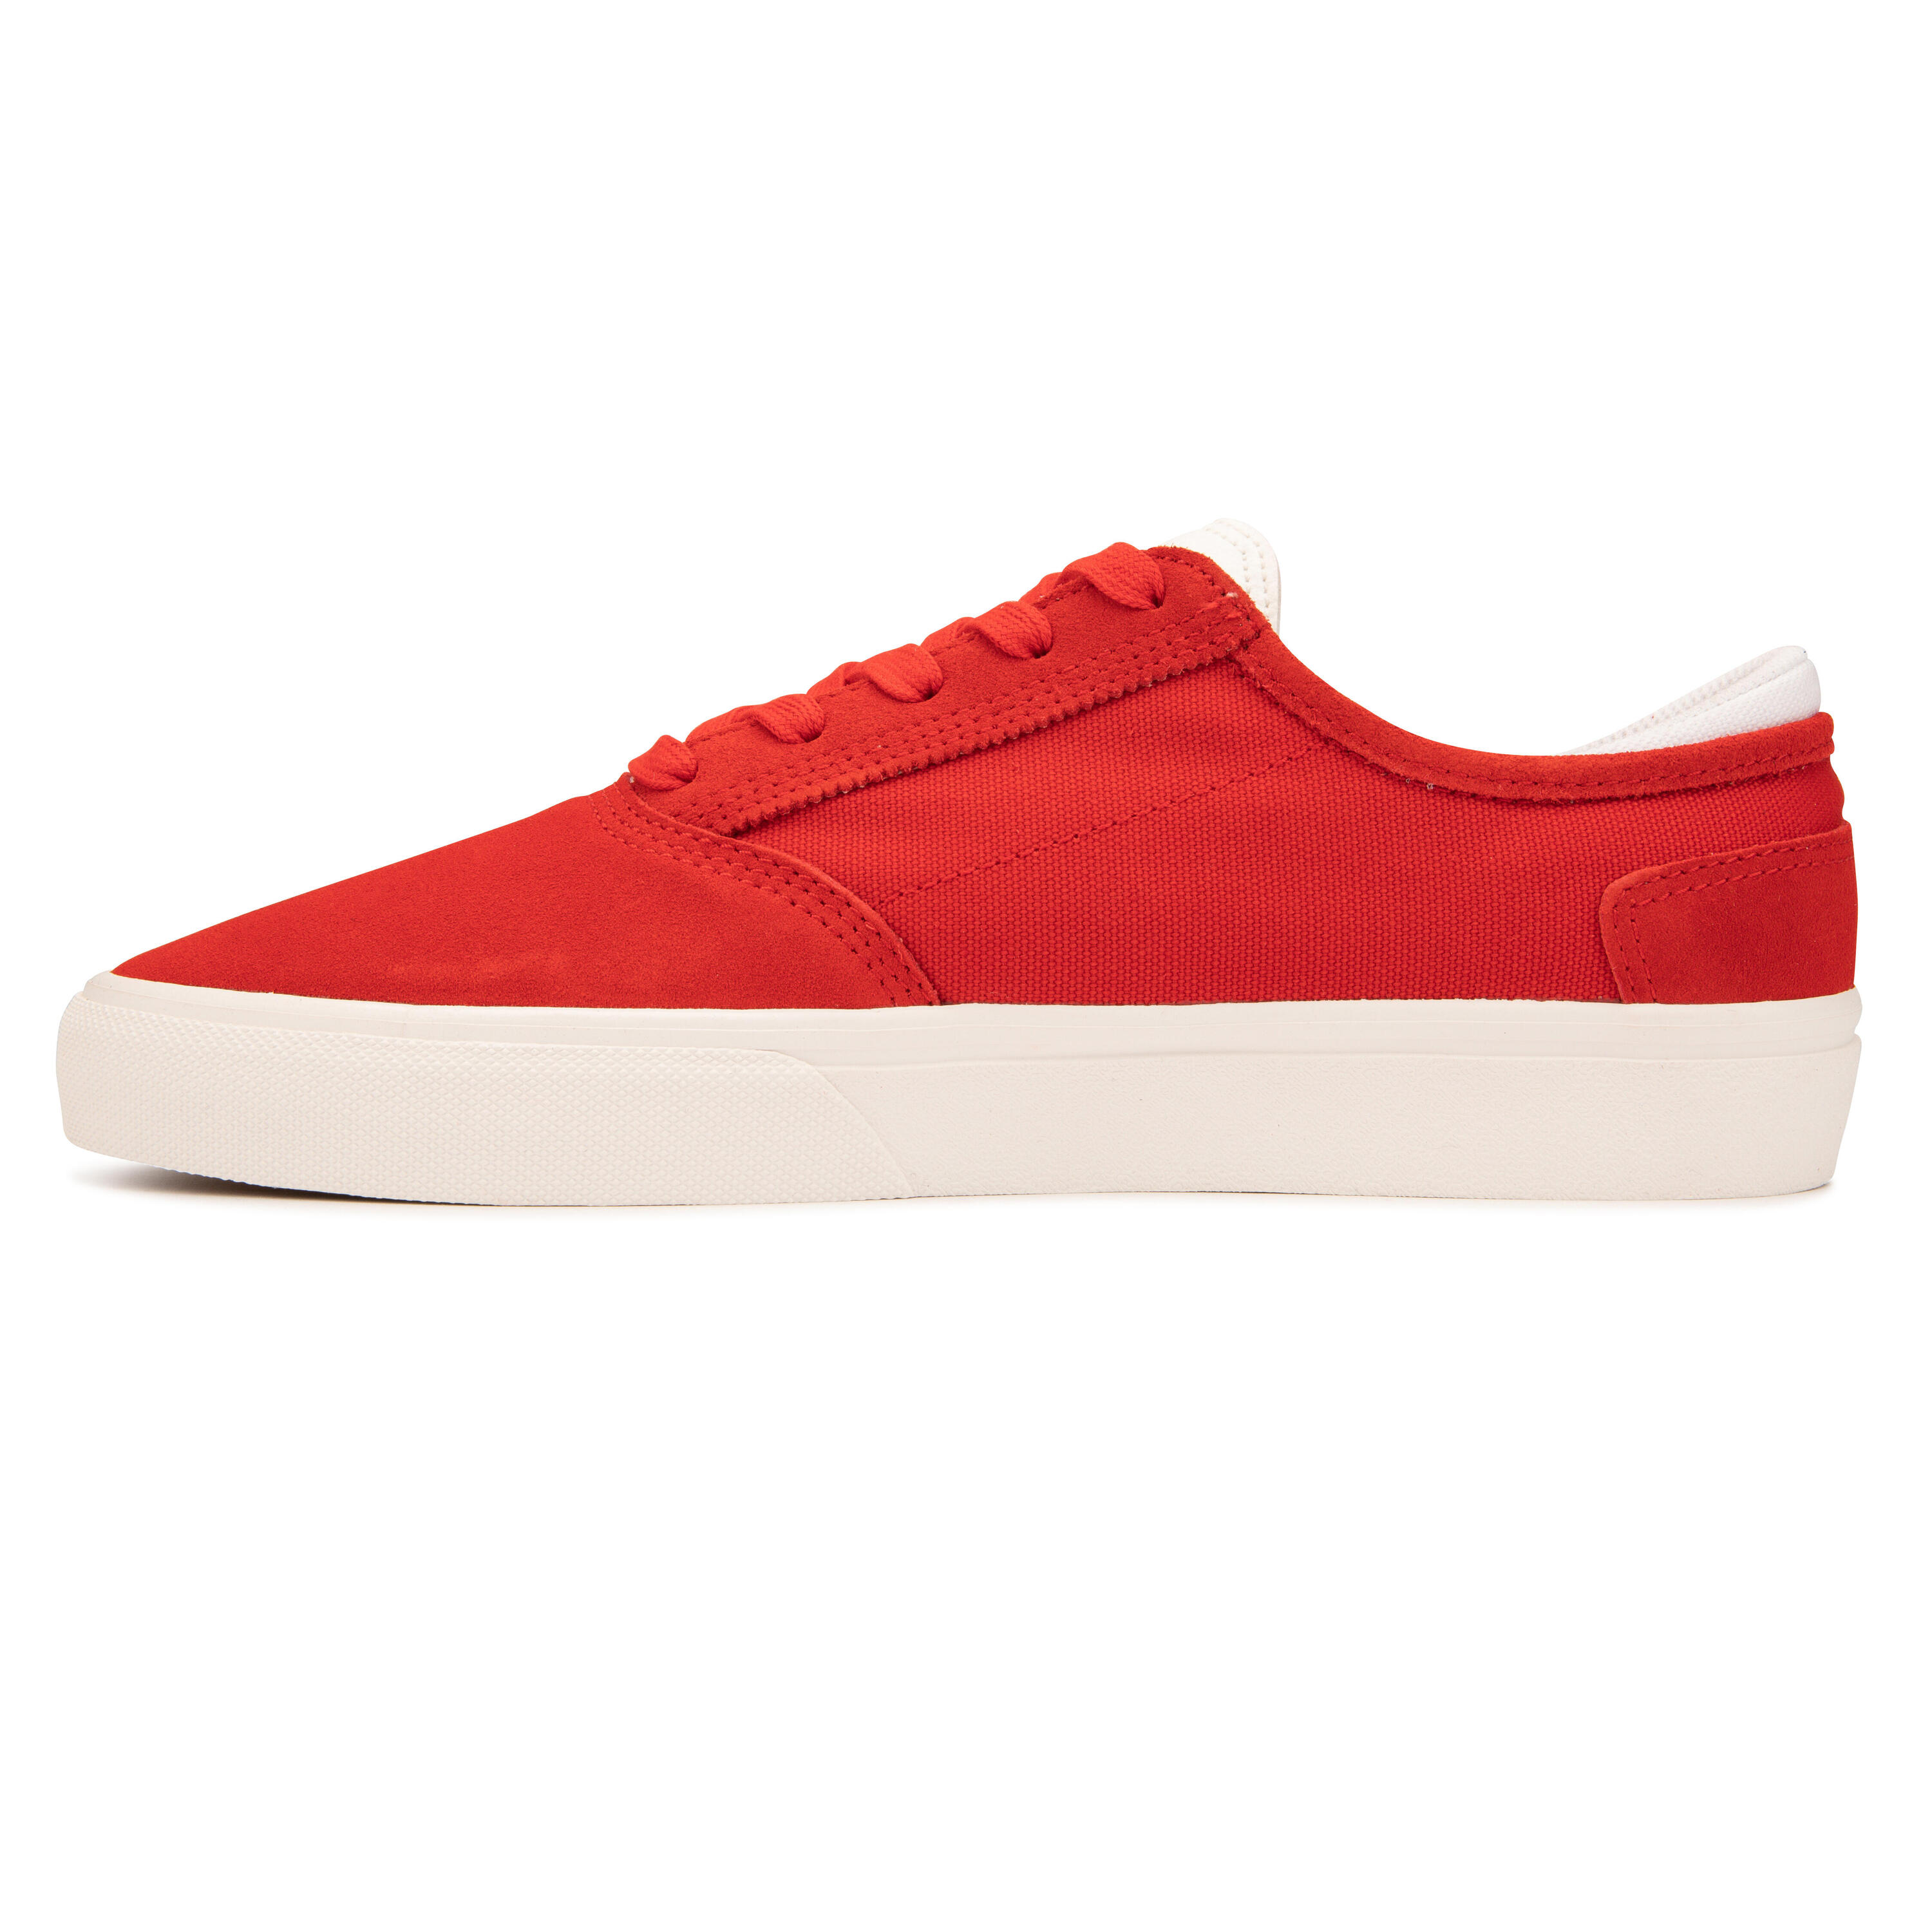 Adult Vulcanised Skate Shoes Vulca 500 II - Red/White 3/14